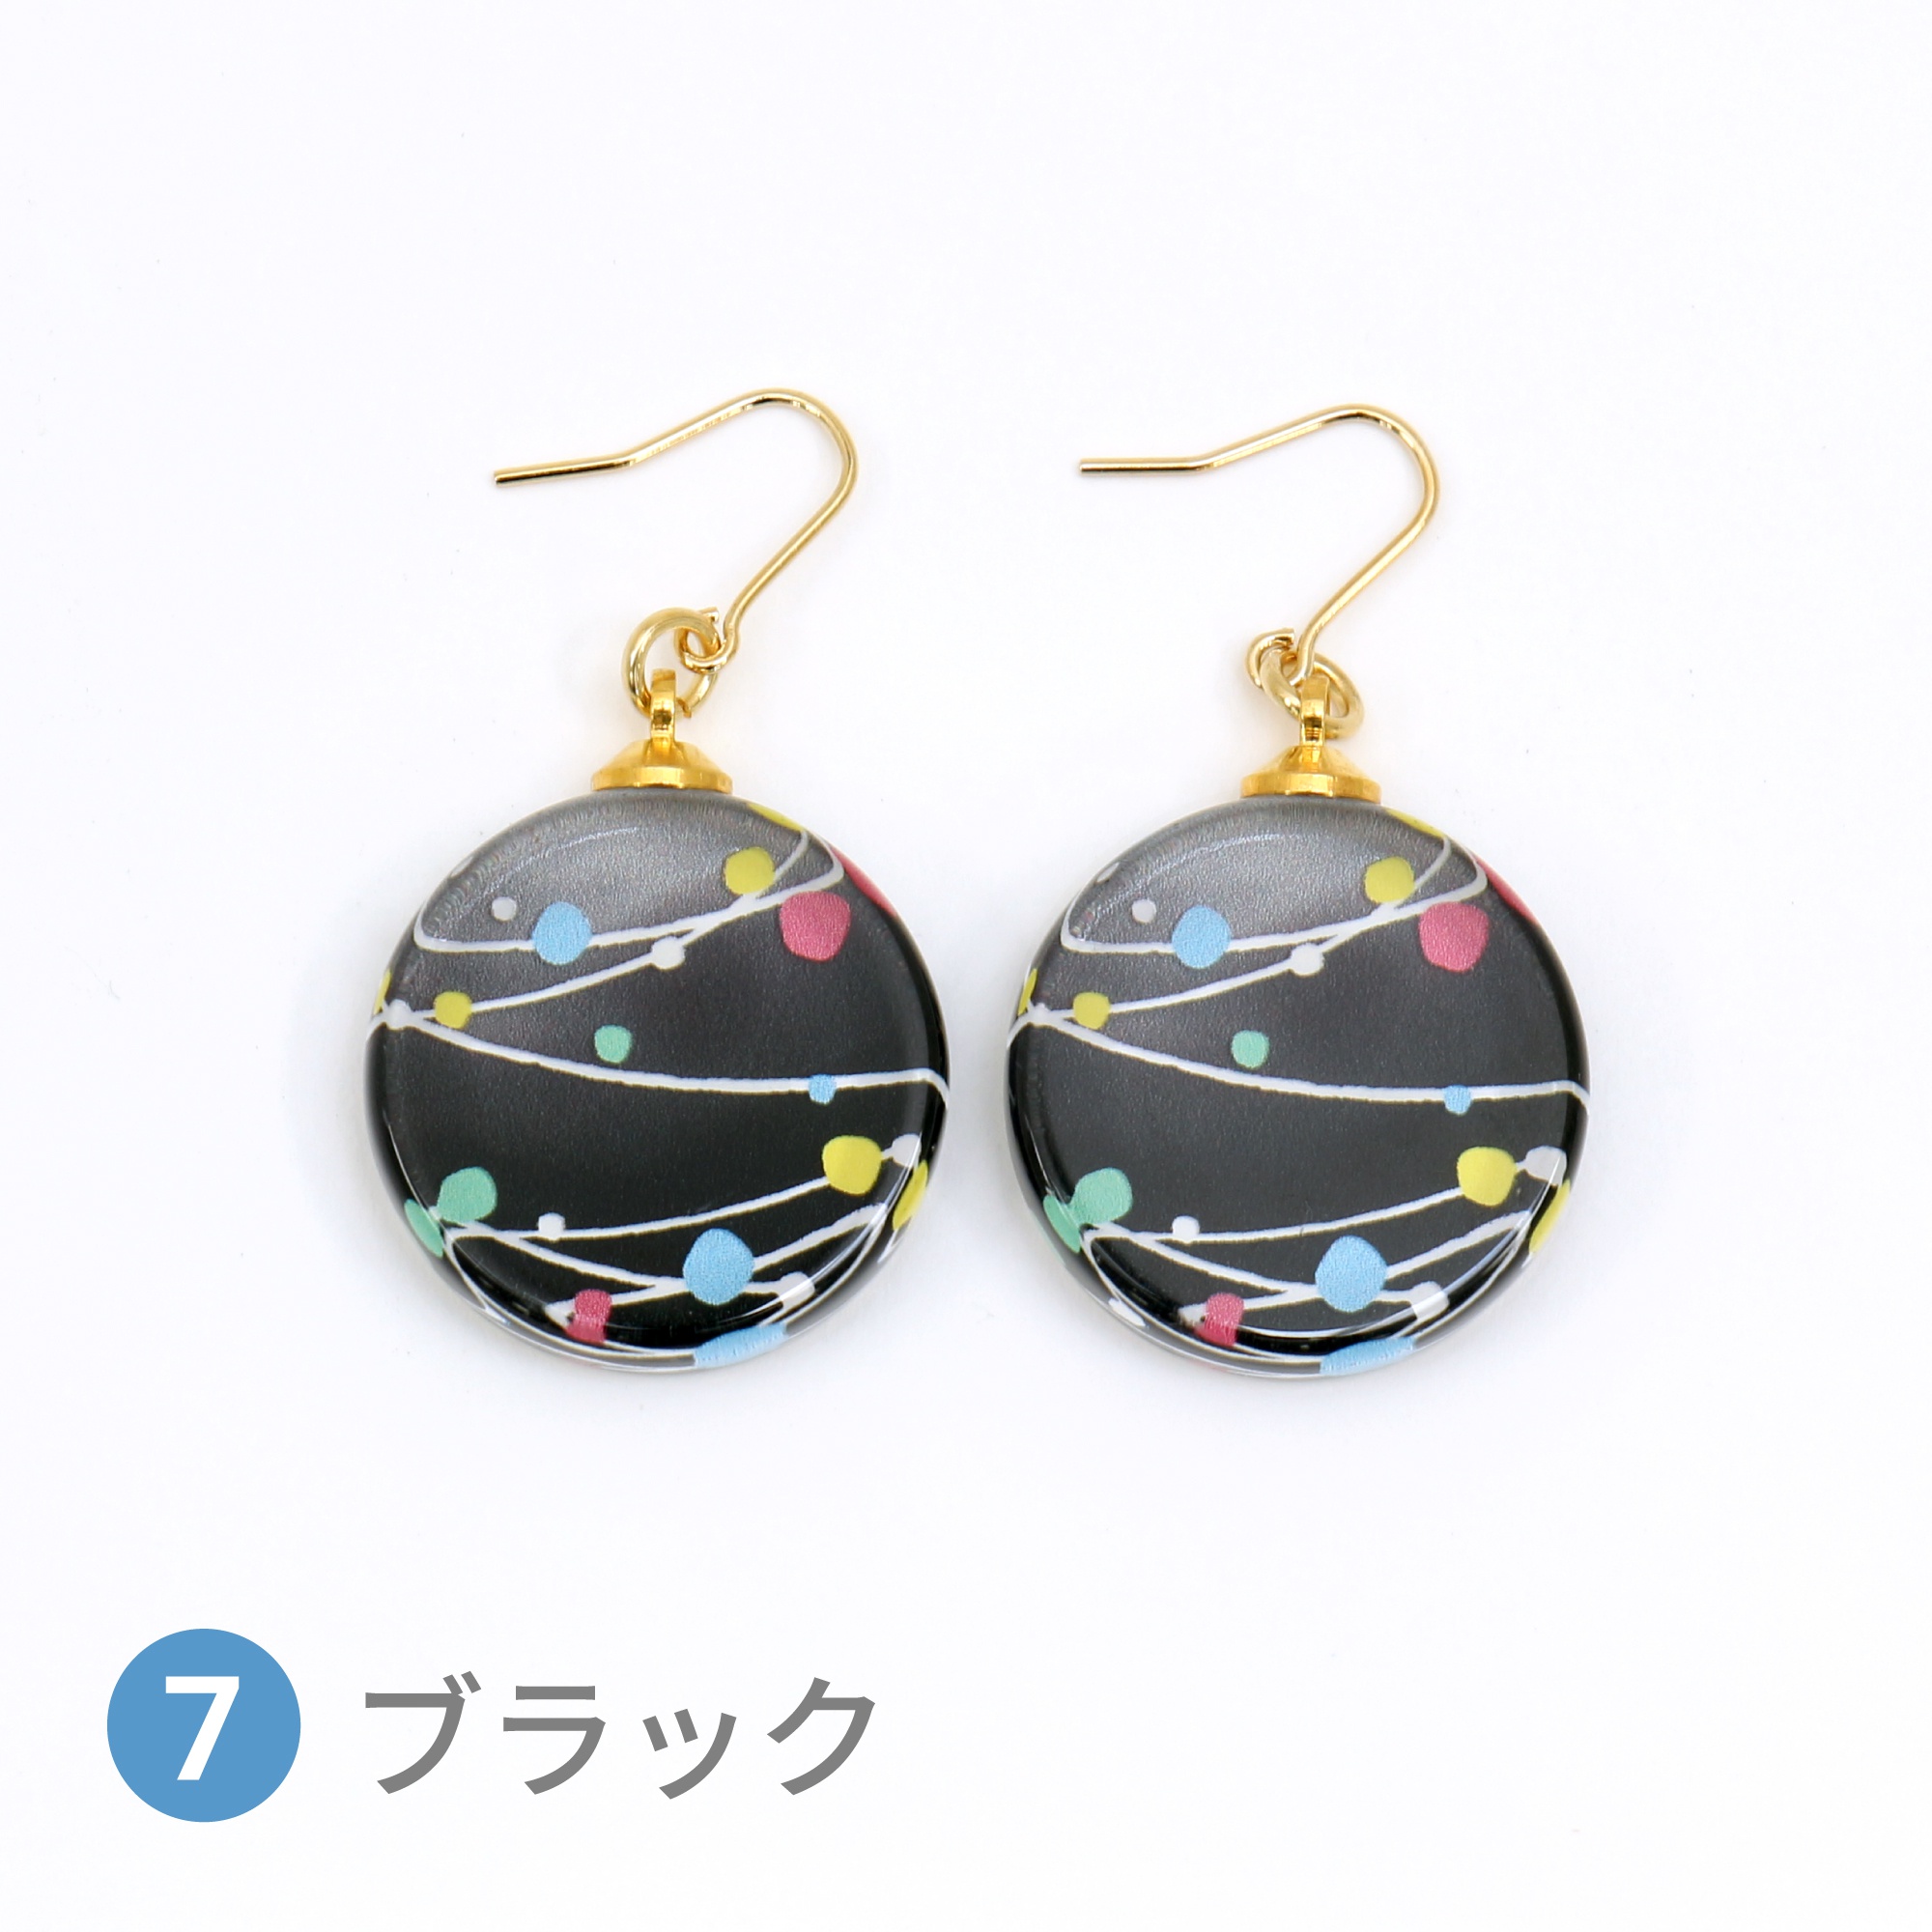 Glass accessories Pierced Earring WATER BALLOON black round shape